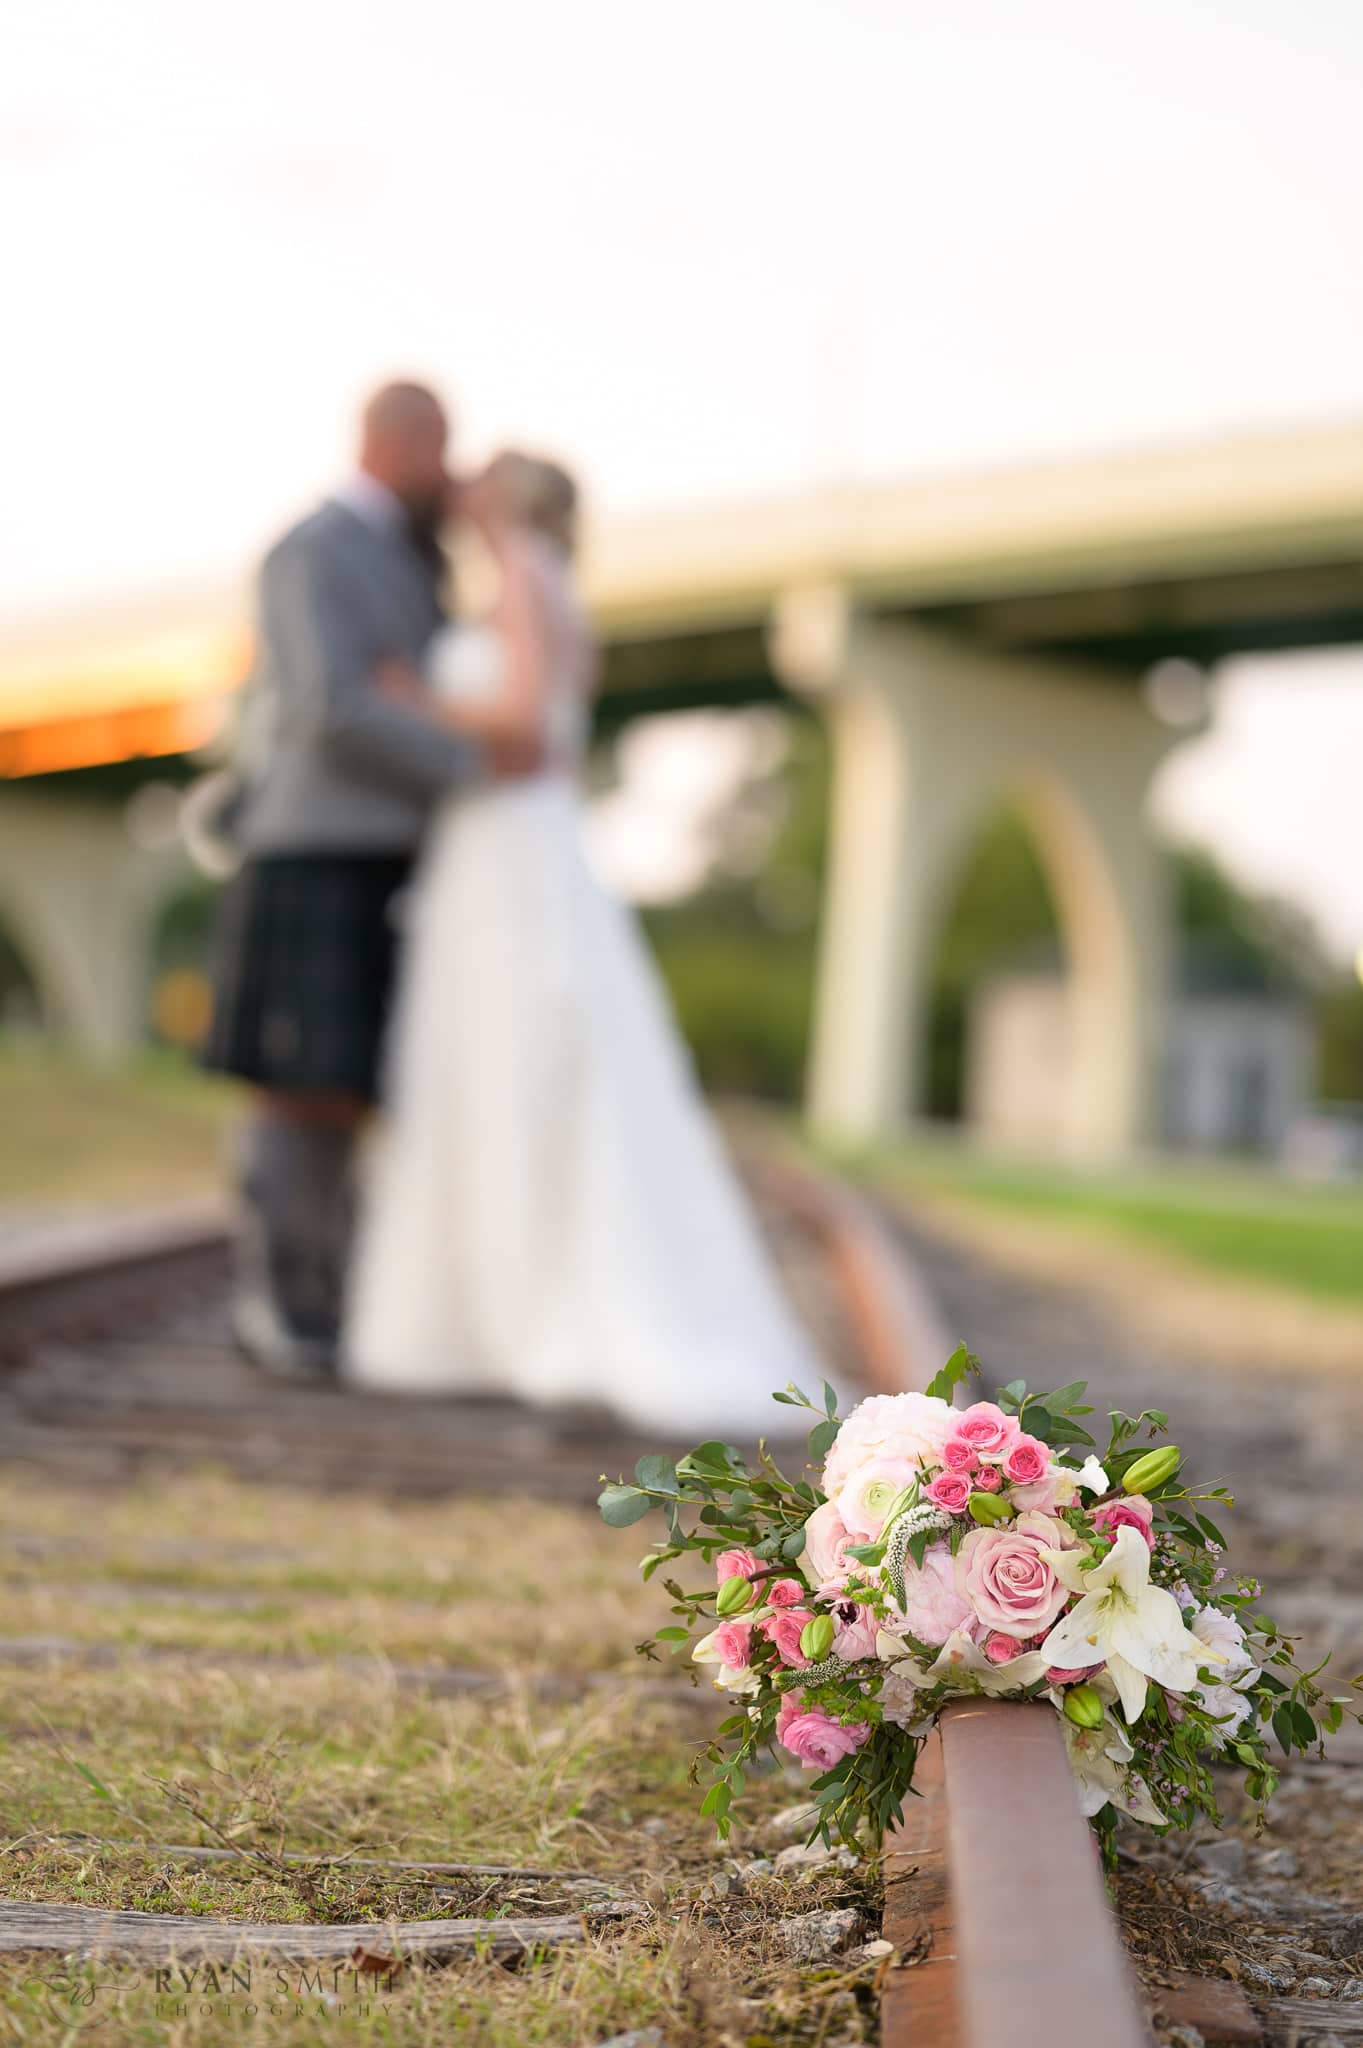 Flowers in focus on the train tracks - Conway Riverwalk